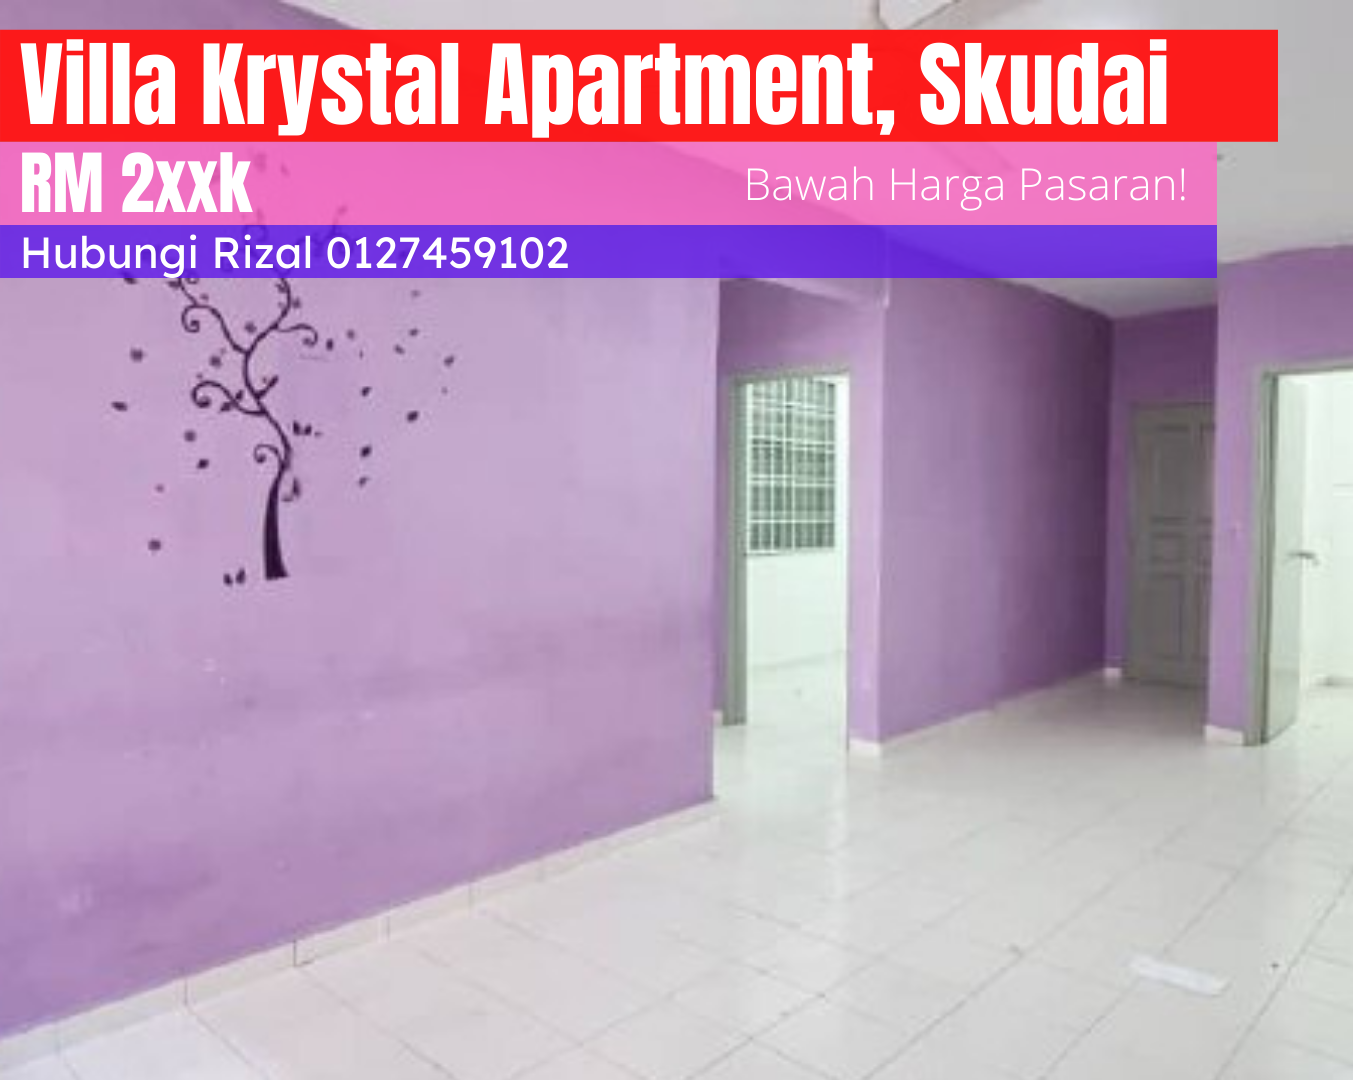 Villa Krystal Apartment, Skudai. Johor